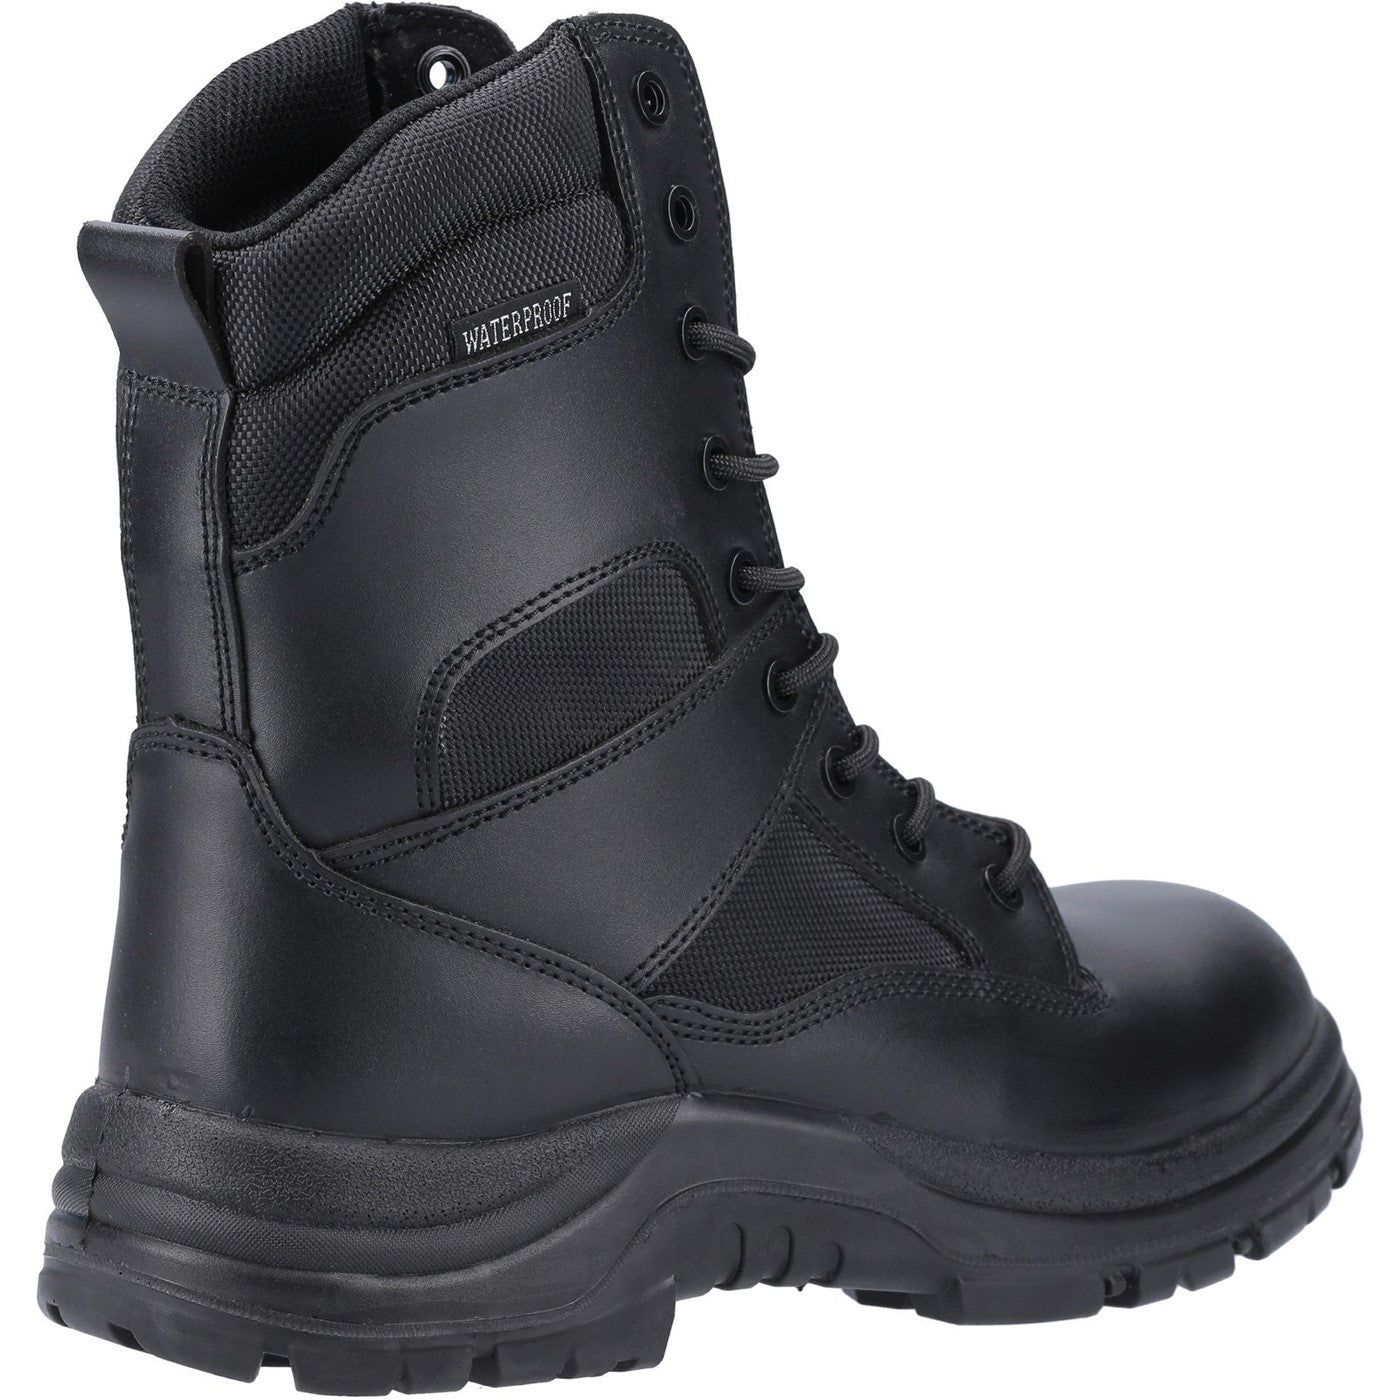 Men's Amblers Safety Combat Hi-Leg Waterproof Metal Free Boot